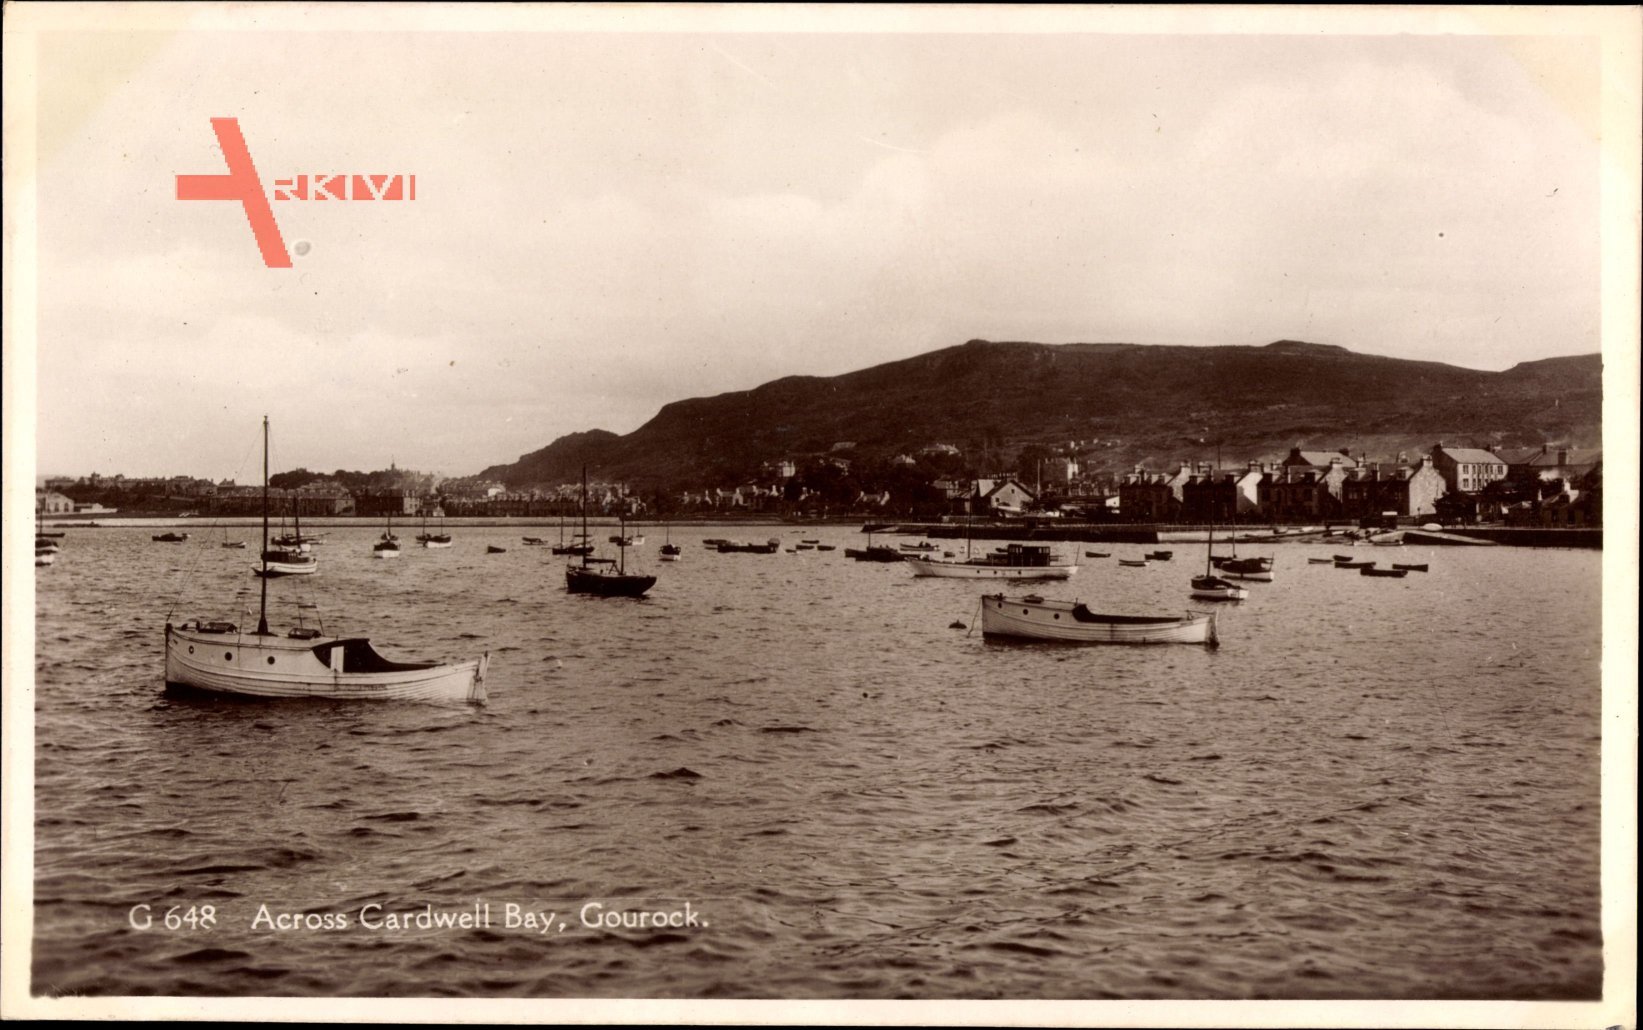 Gourock Schottland, Across Cardwell Bay, Boote in der Bucht